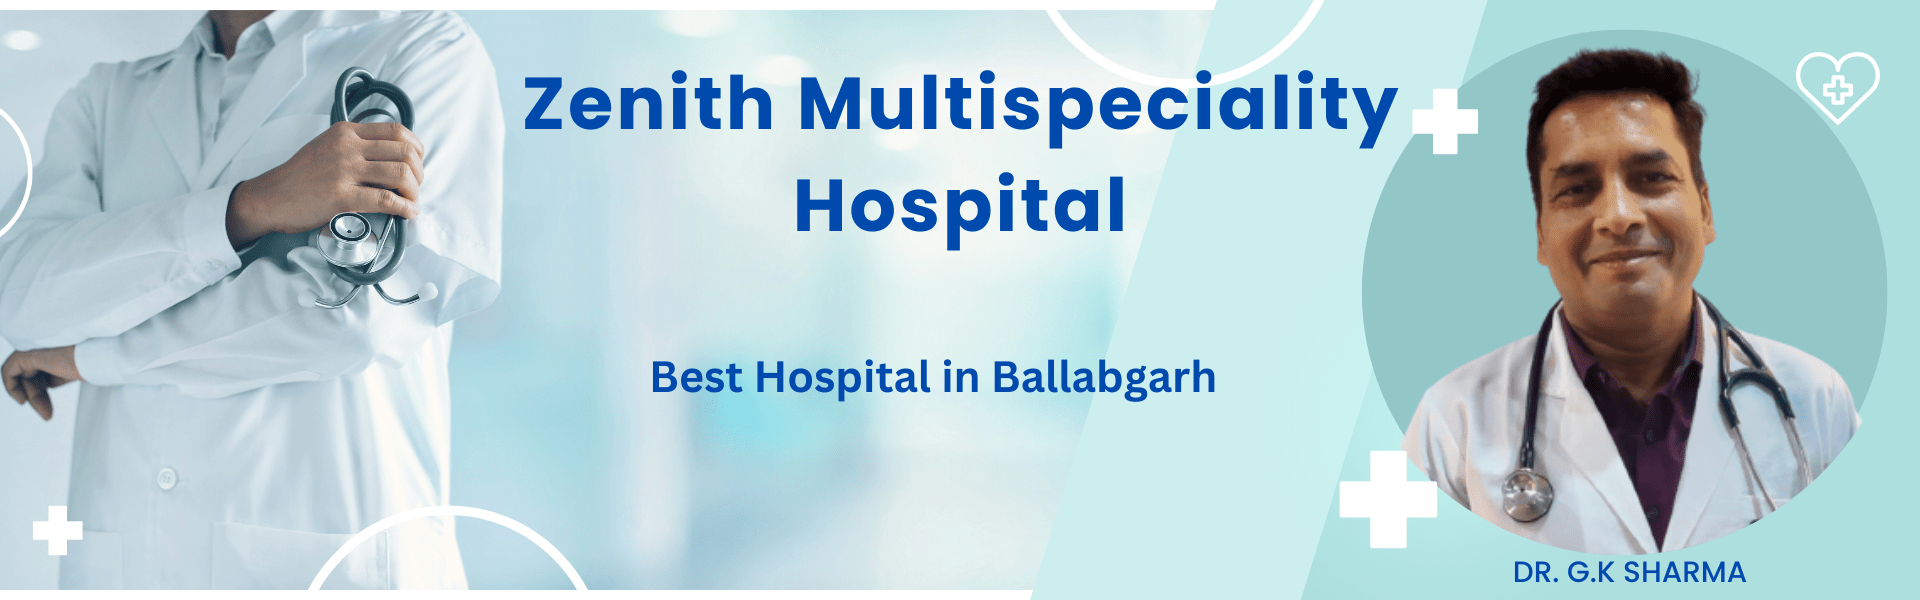 Zenith Multispeciality Hospital (1)-min